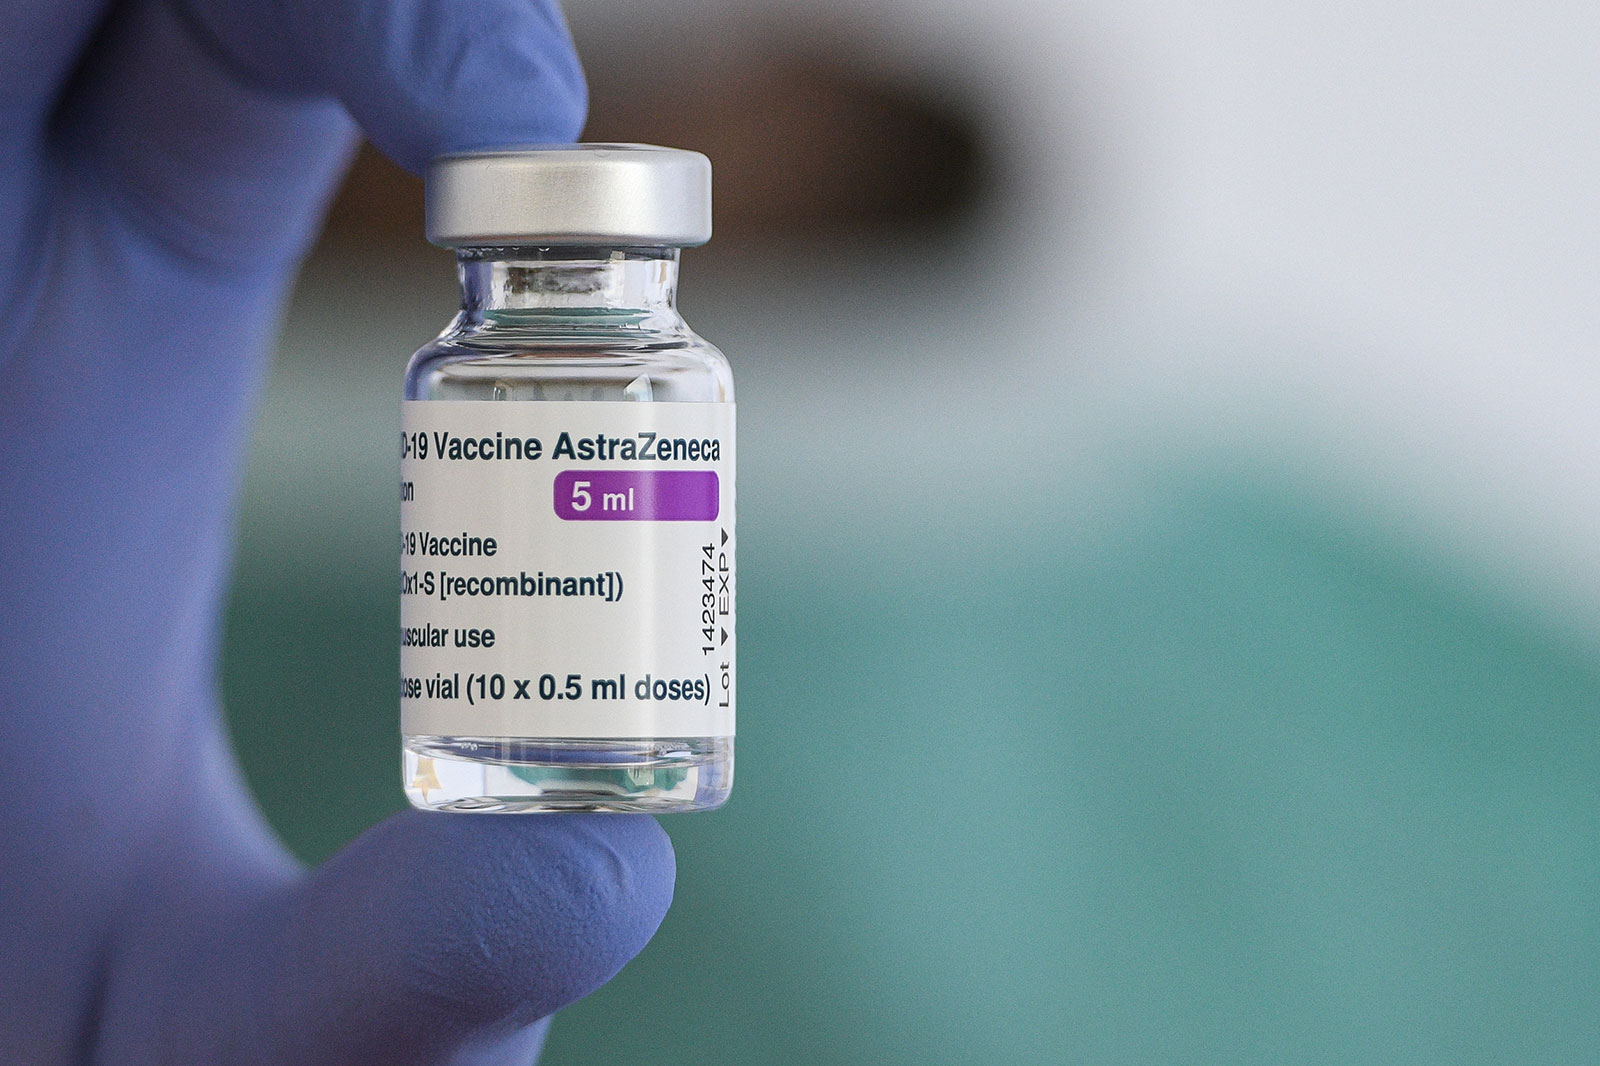 AstraZeneca Covid19 vaccine benefits outweigh risks, European